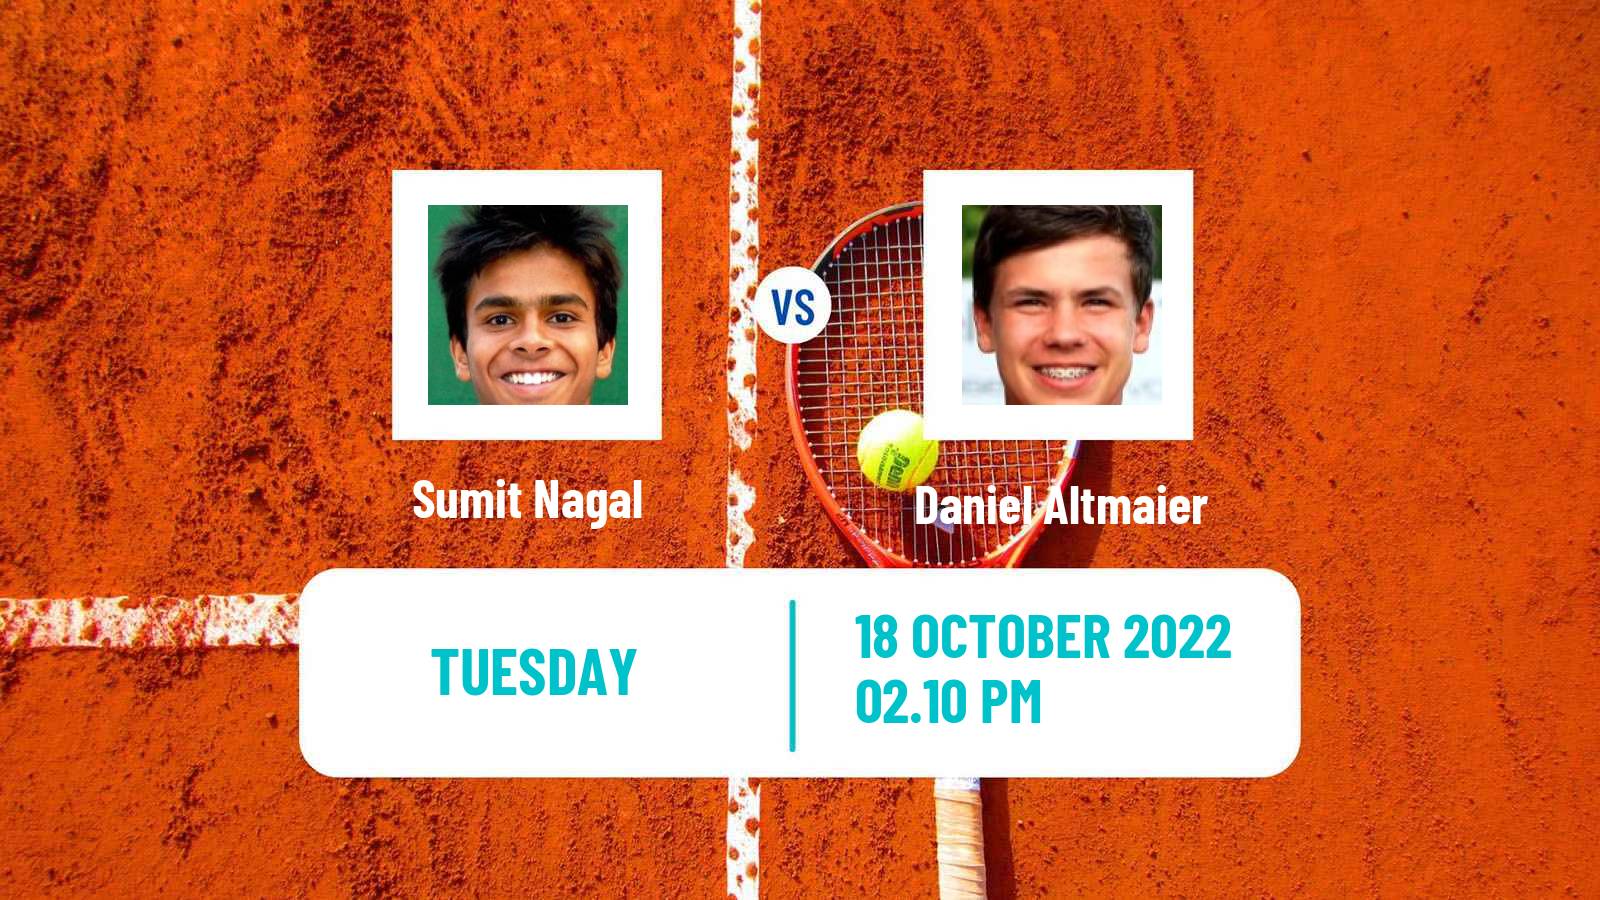 Tennis ATP Challenger Sumit Nagal - Daniel Altmaier